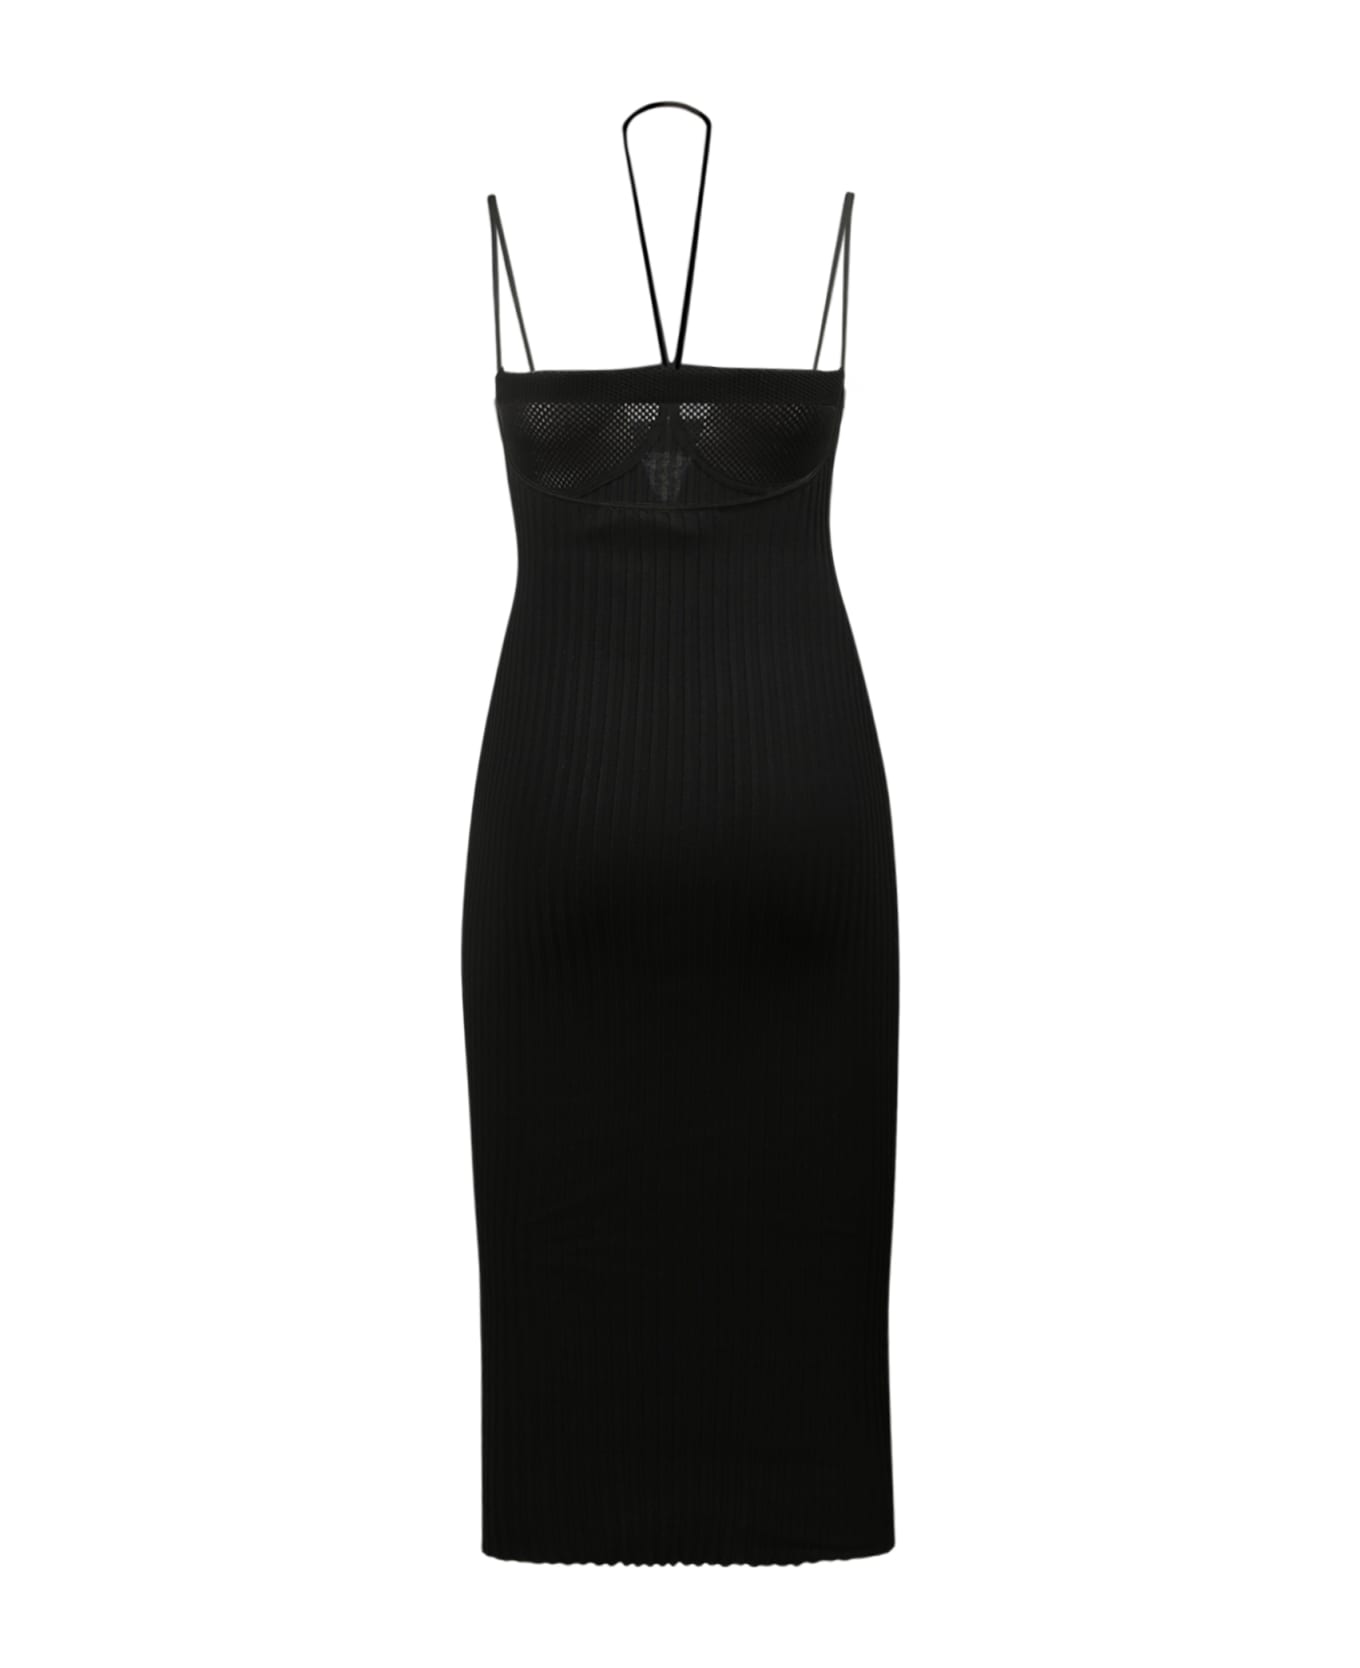 ANDREĀDAMO Ribbed Knit Midi Dress - Black